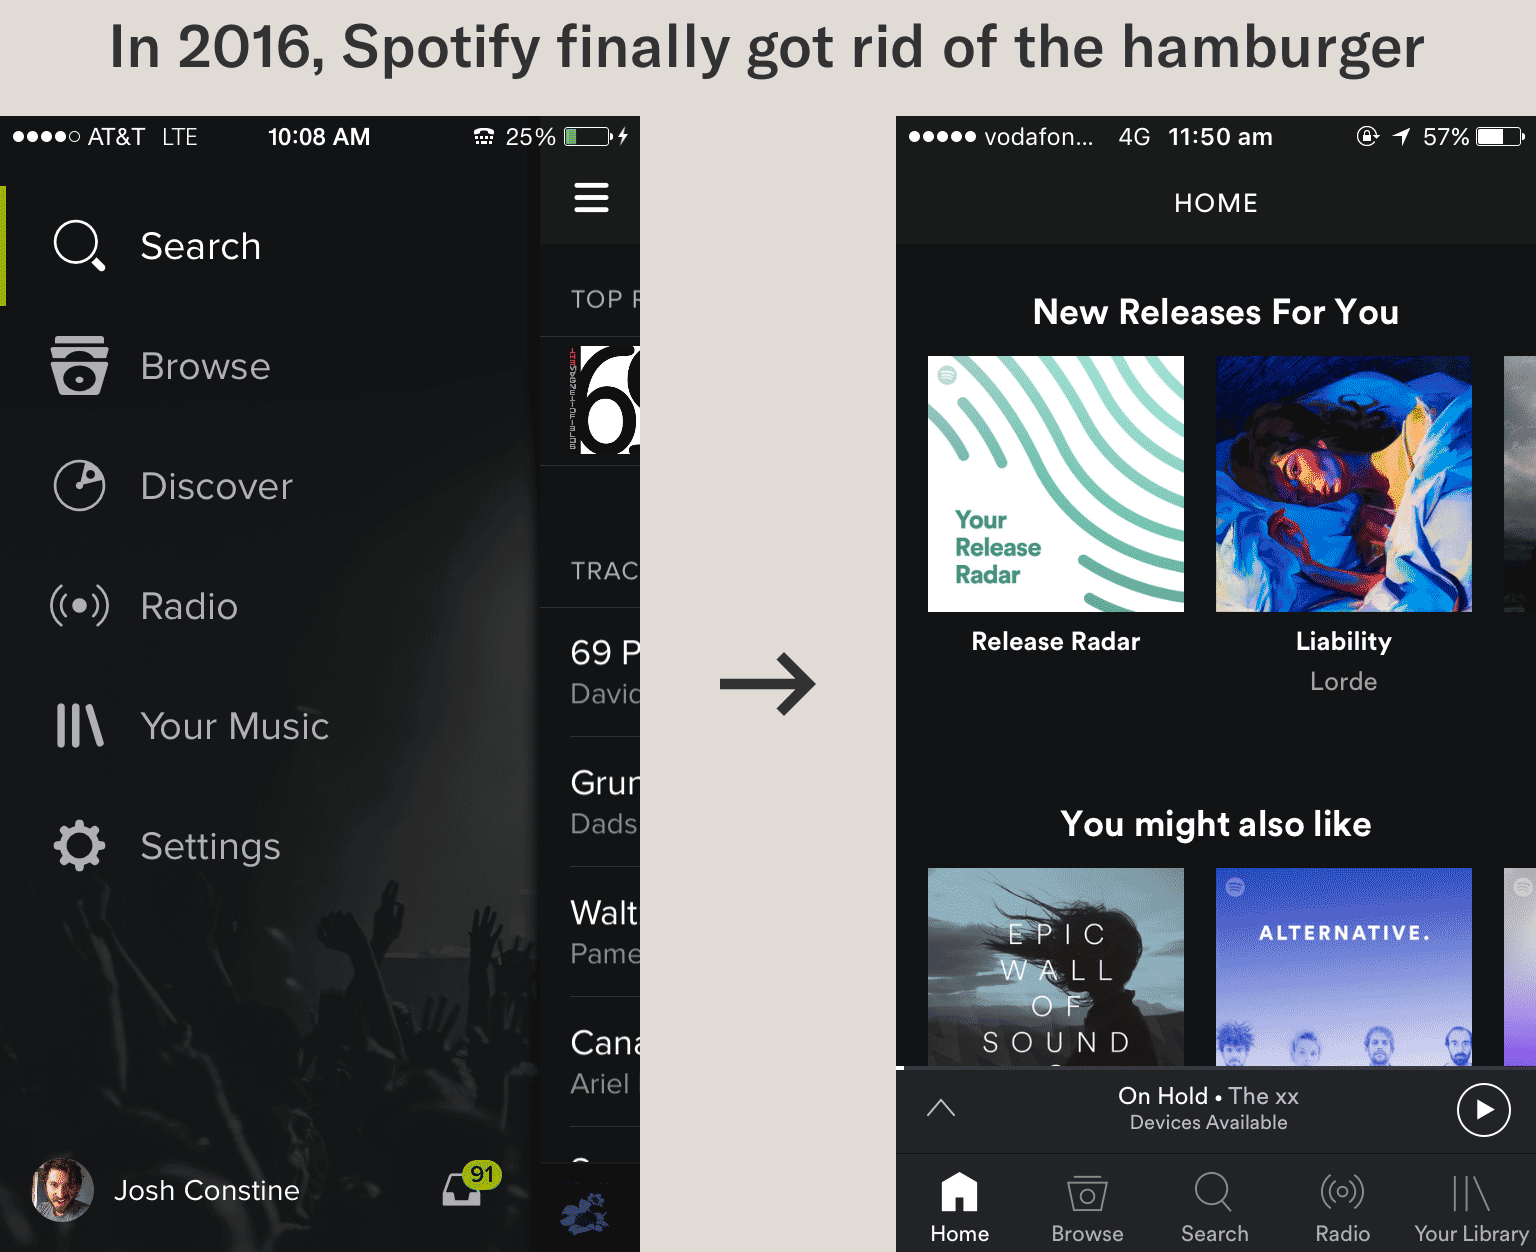 Spotify only got rid of their hamburger menu in 2016.